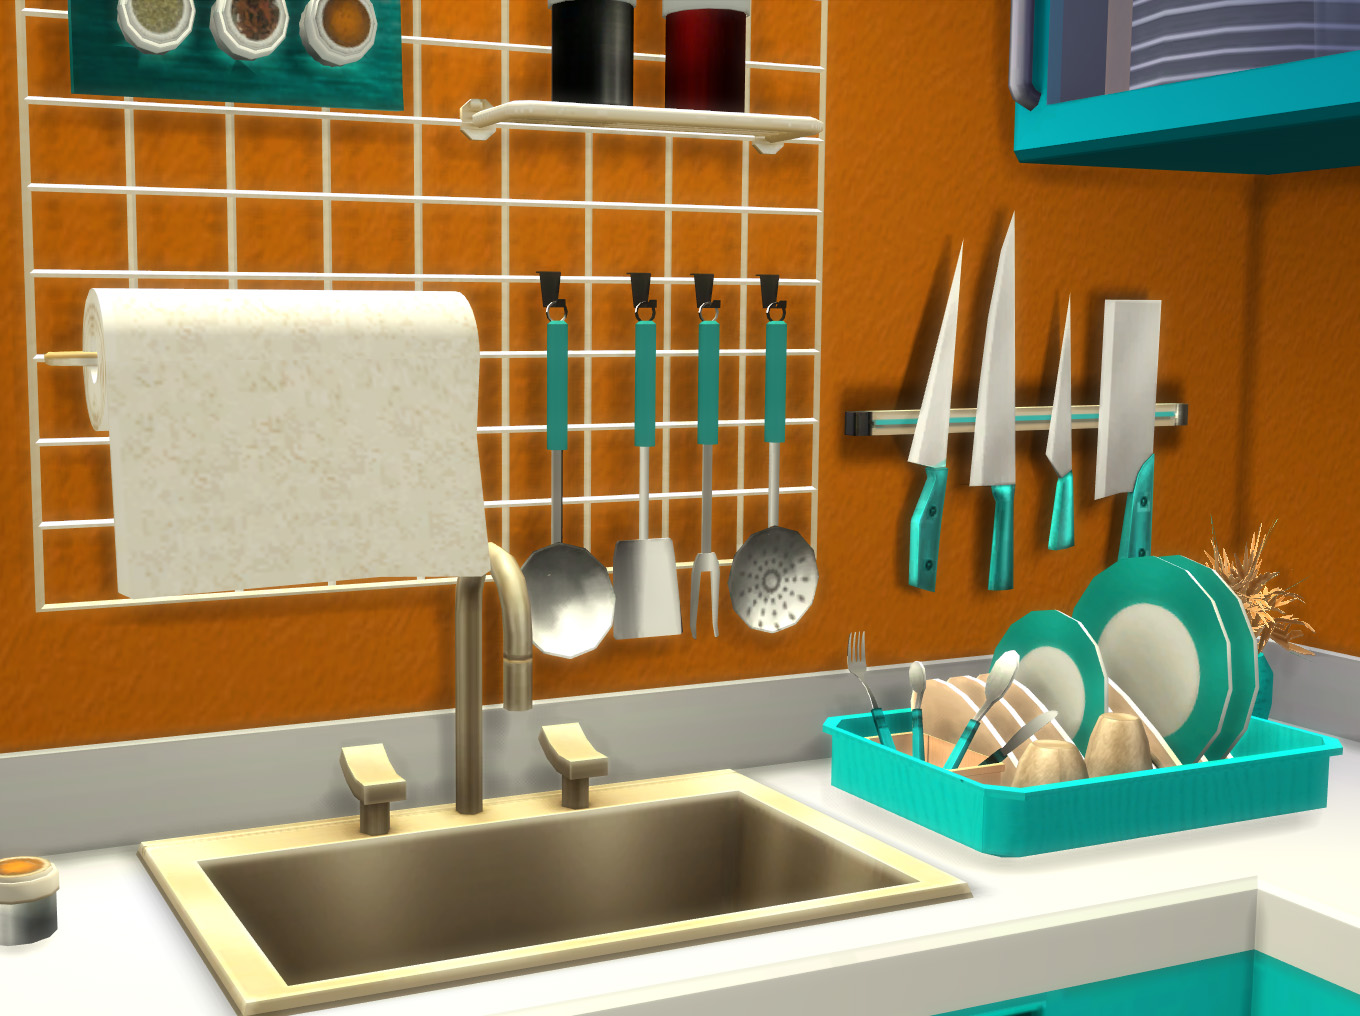 Sims 4 Ccs The Best Altea Kitchen Clutter Part 2 By Pqsim4